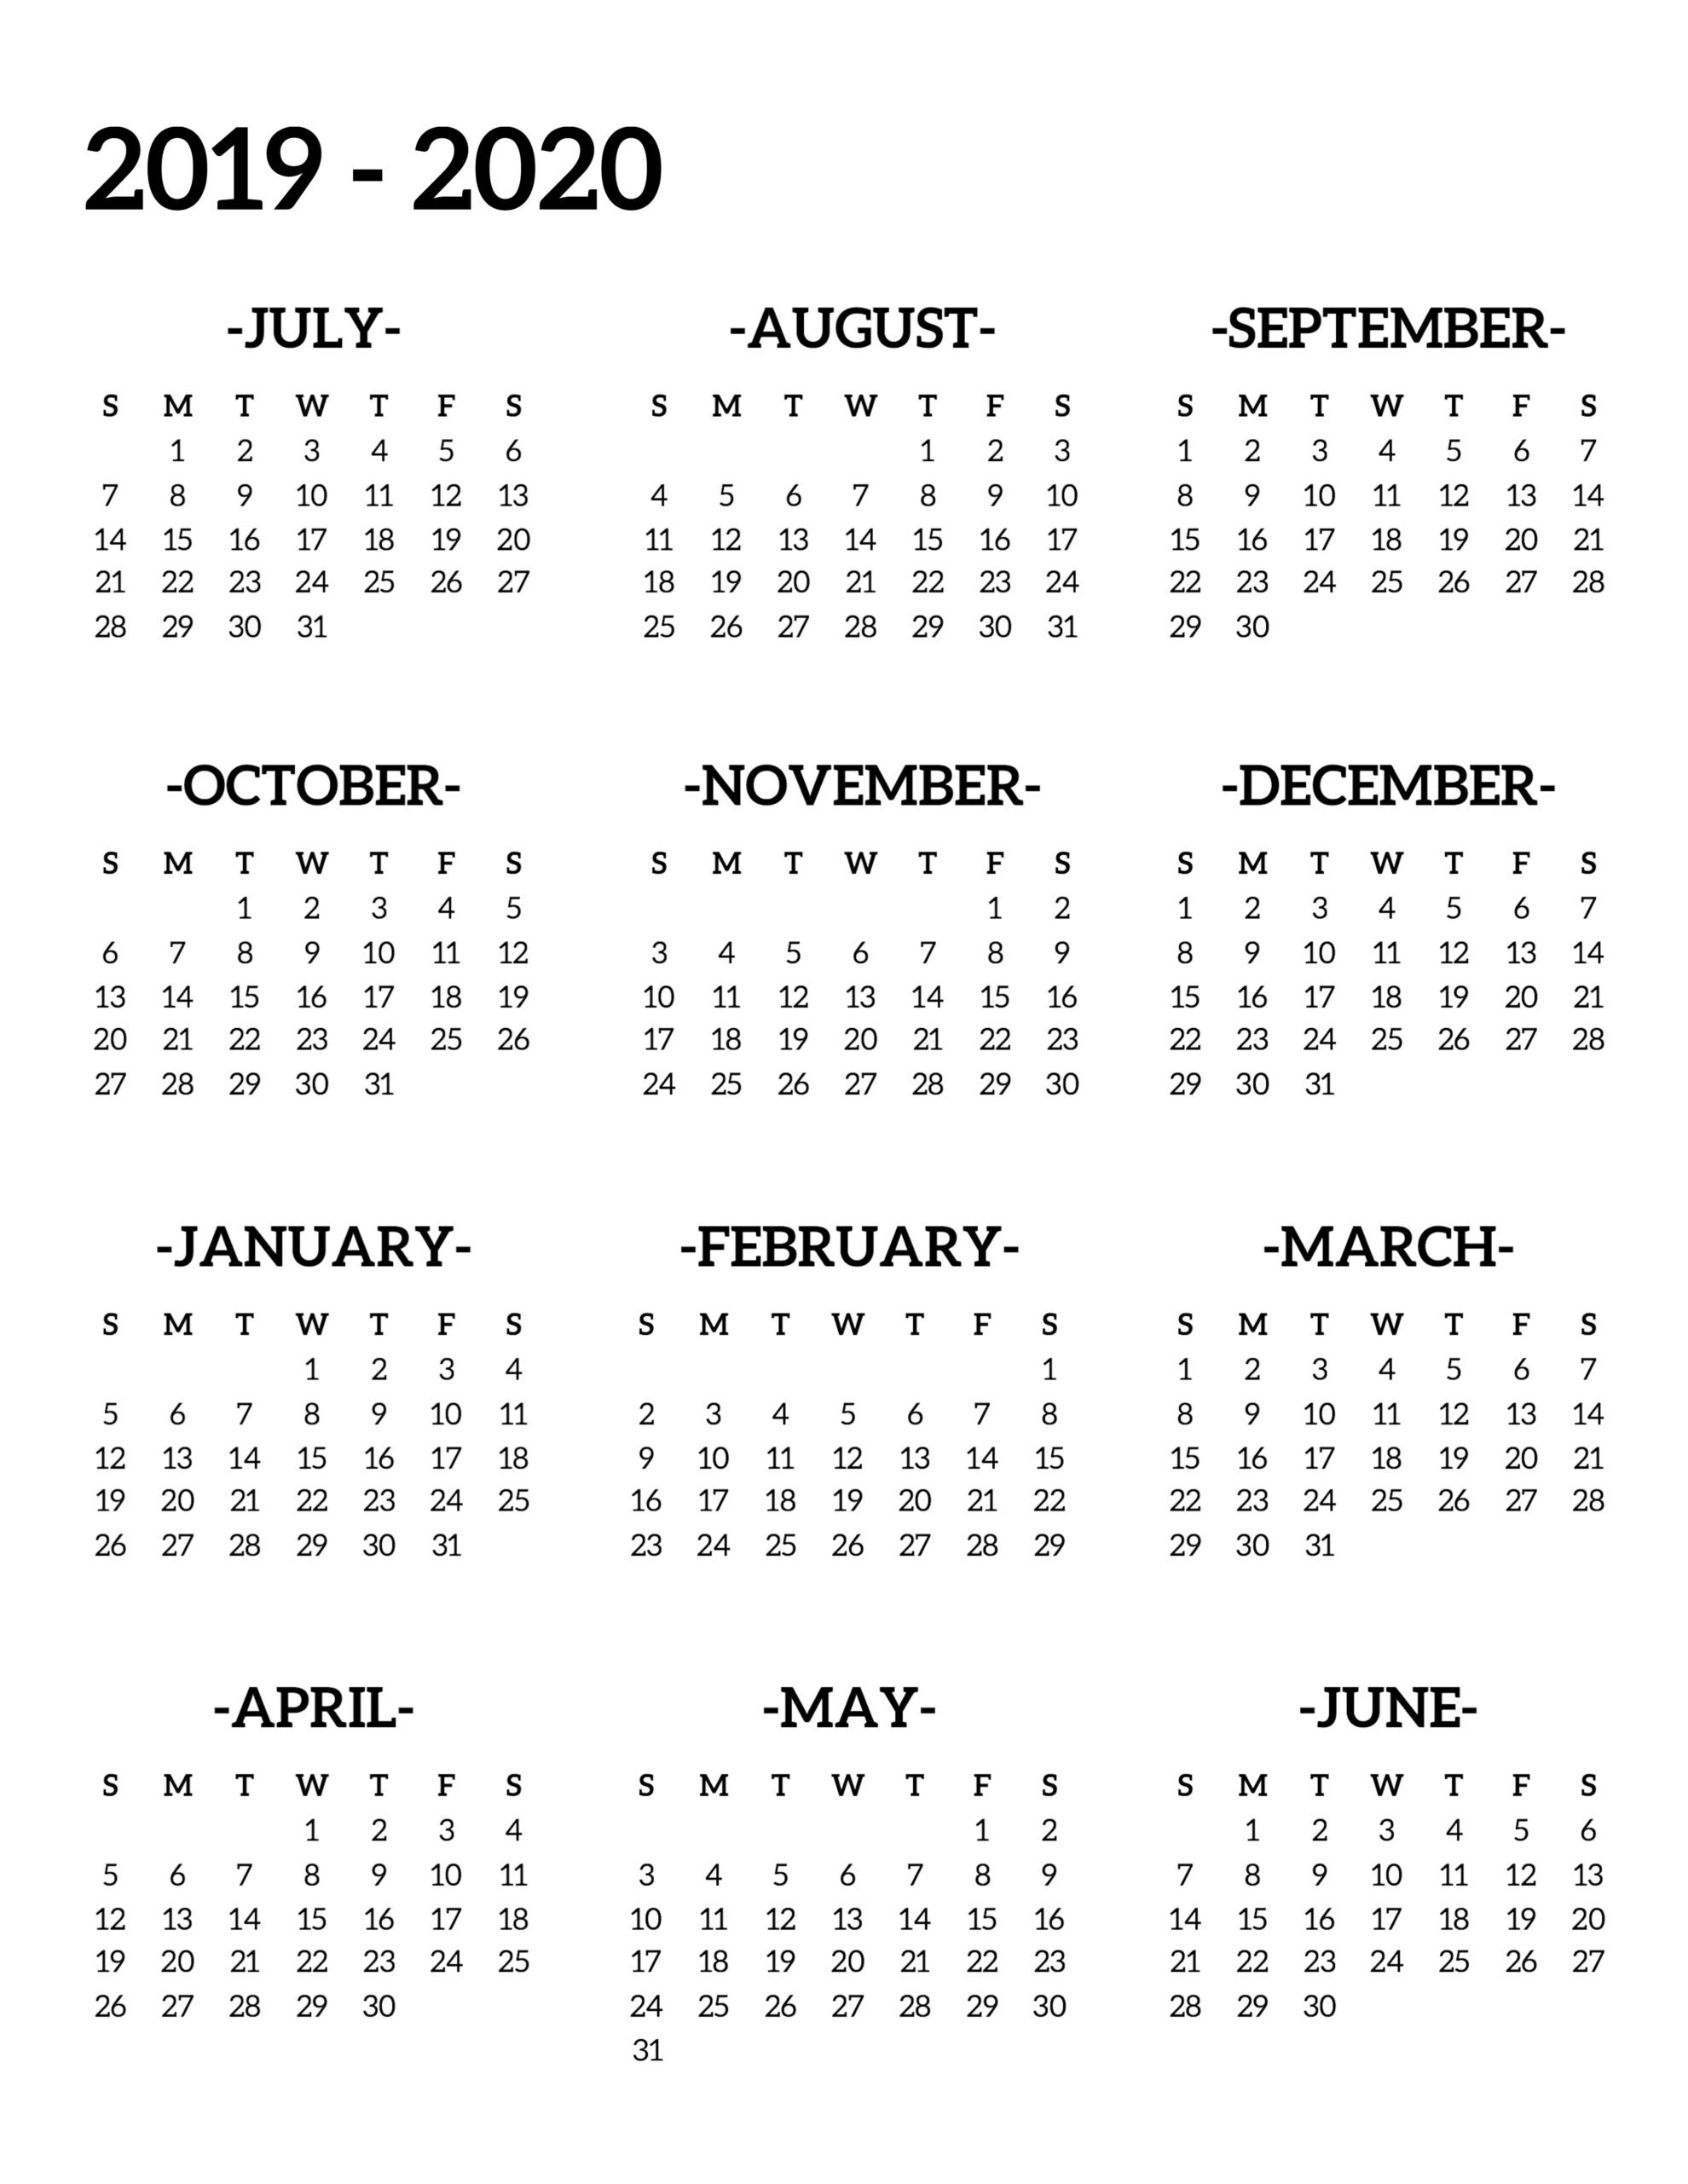 2019-2020 One Page School Calendar Printable - Paper Trail Design regarding Calendar At A Glance 2019-2020 Printable